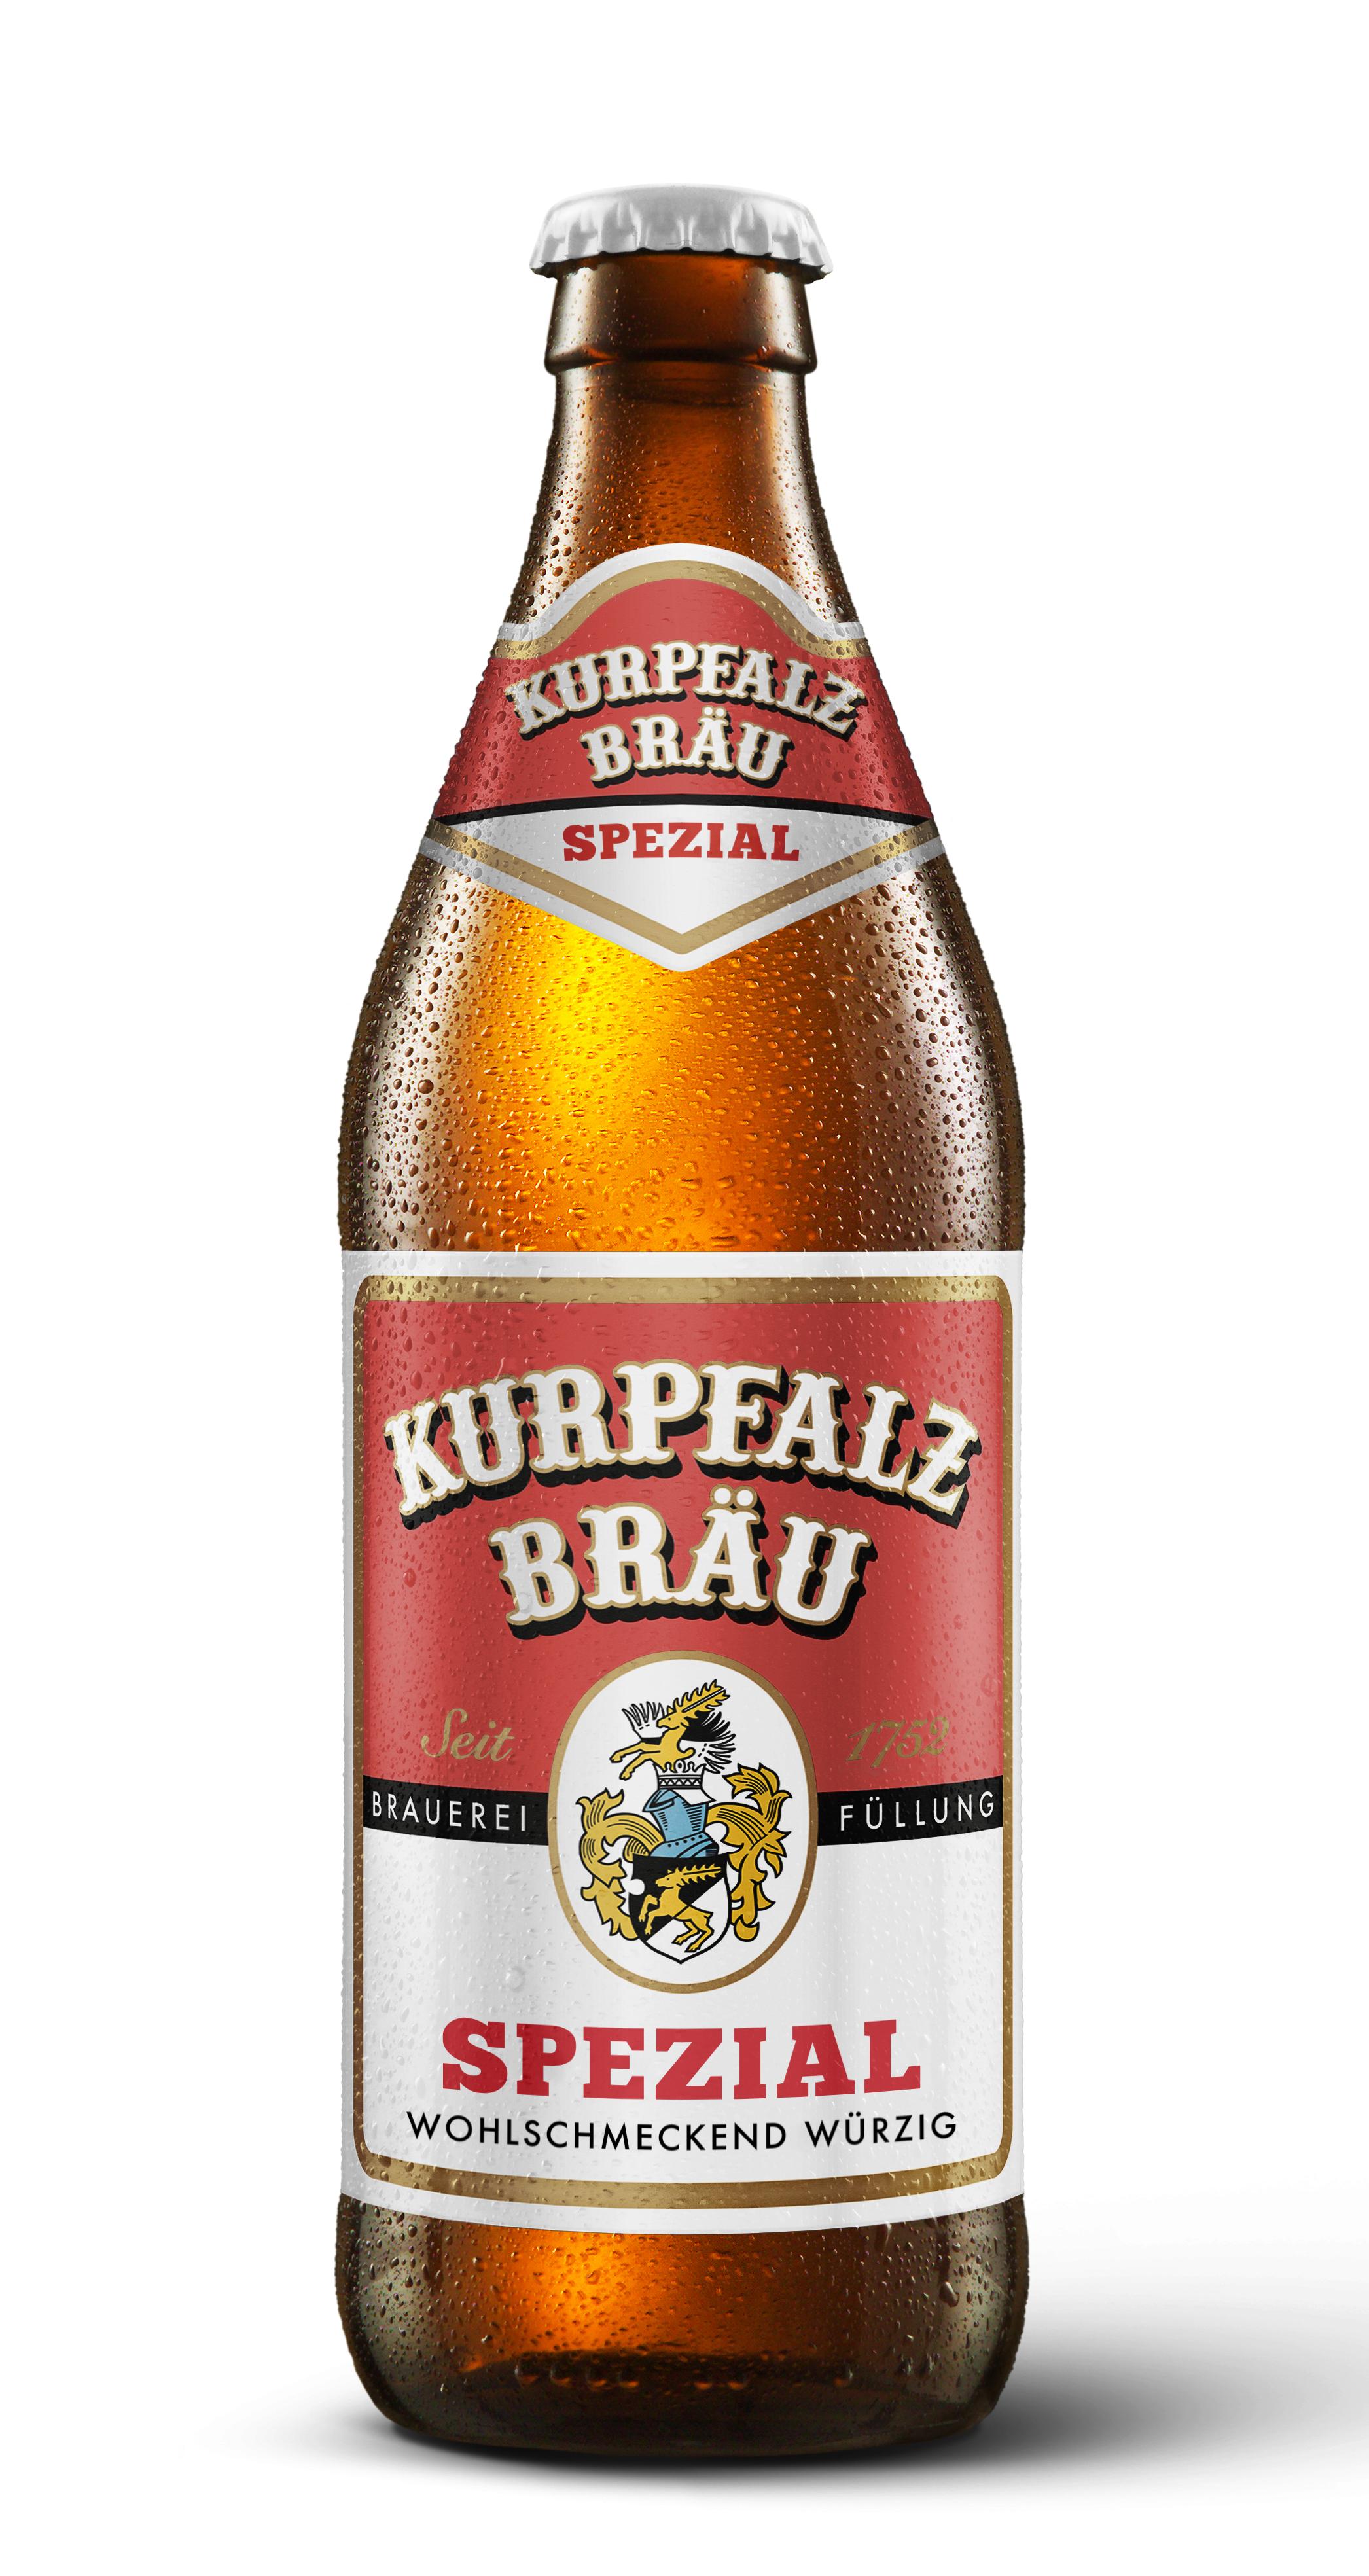 Kurpfalz brau. Kurpfalz Brau helles пиво. Kurpfalz Brau ur Weizen пиво. Курпфальц брой ур Вайцен. Пиво светлое Kurpfalz Brau helles фильтр.